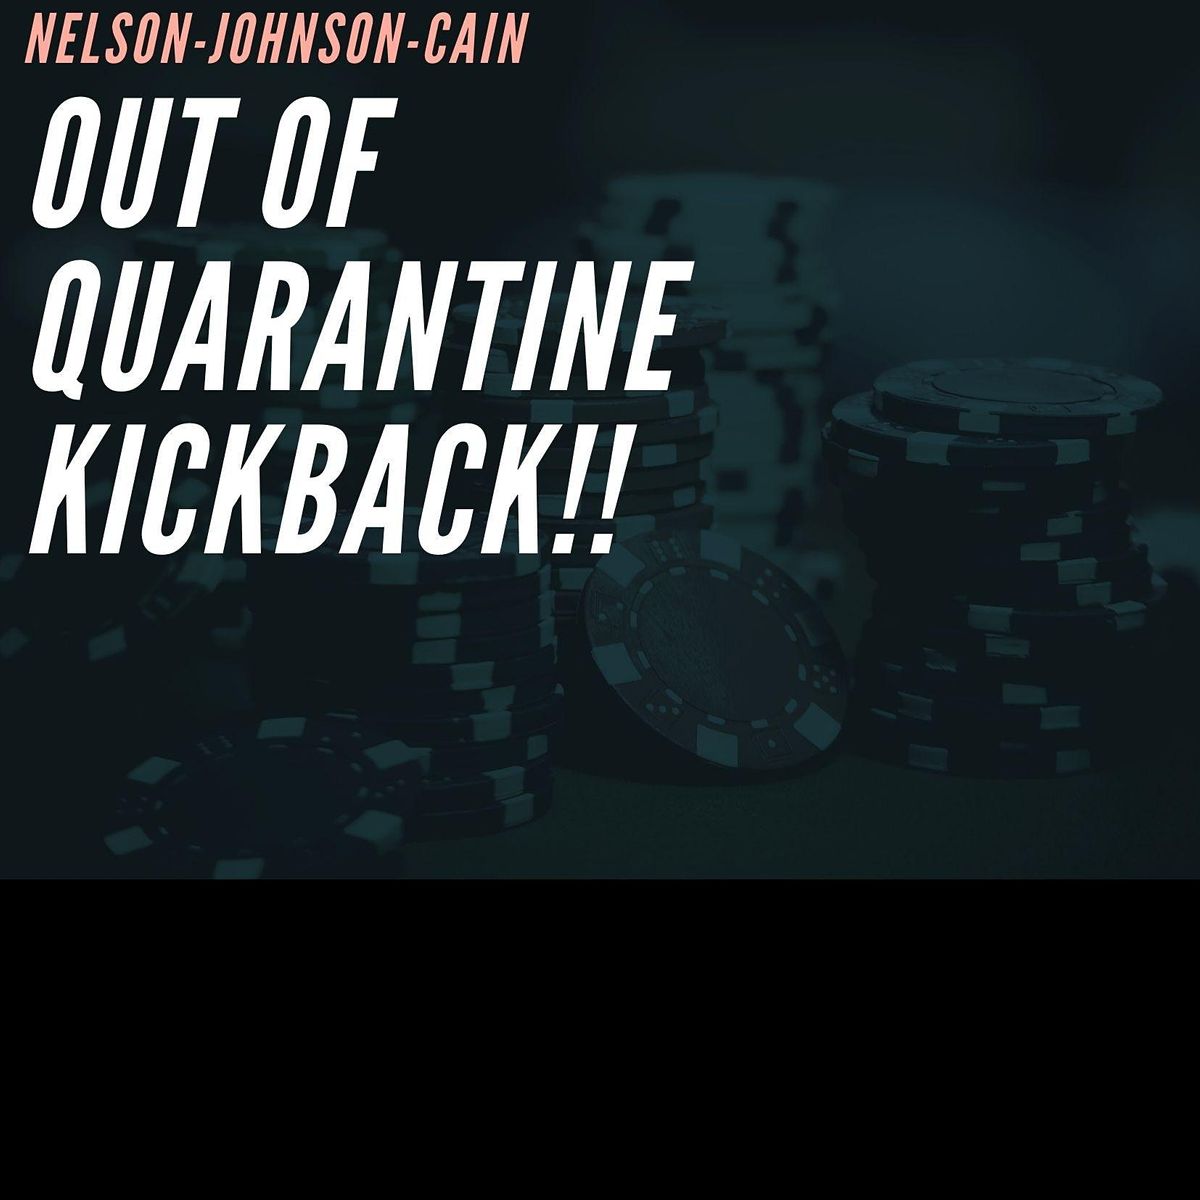 Nelson-Johnson-Cain OUT of Quarantine Kickback!!!!